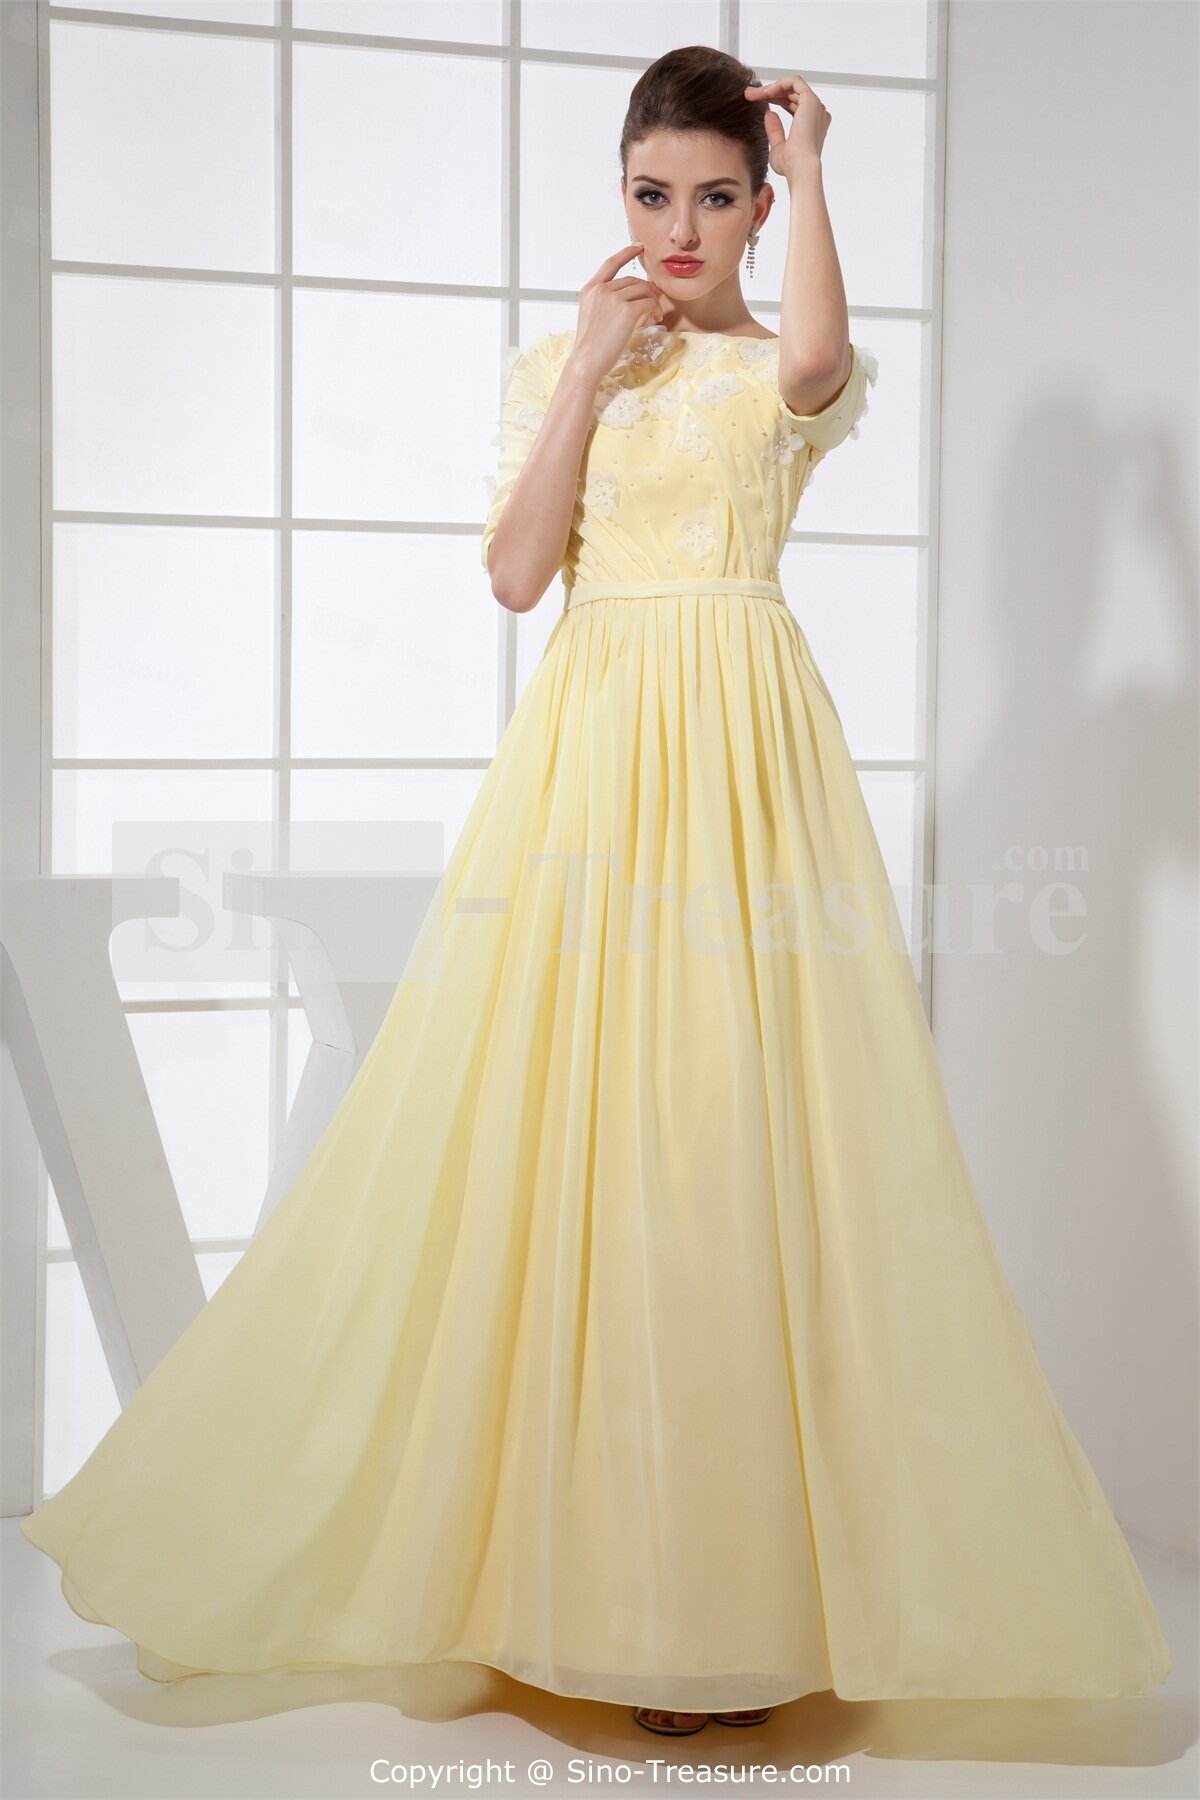 Light yellow wedding dresses Photo - 5